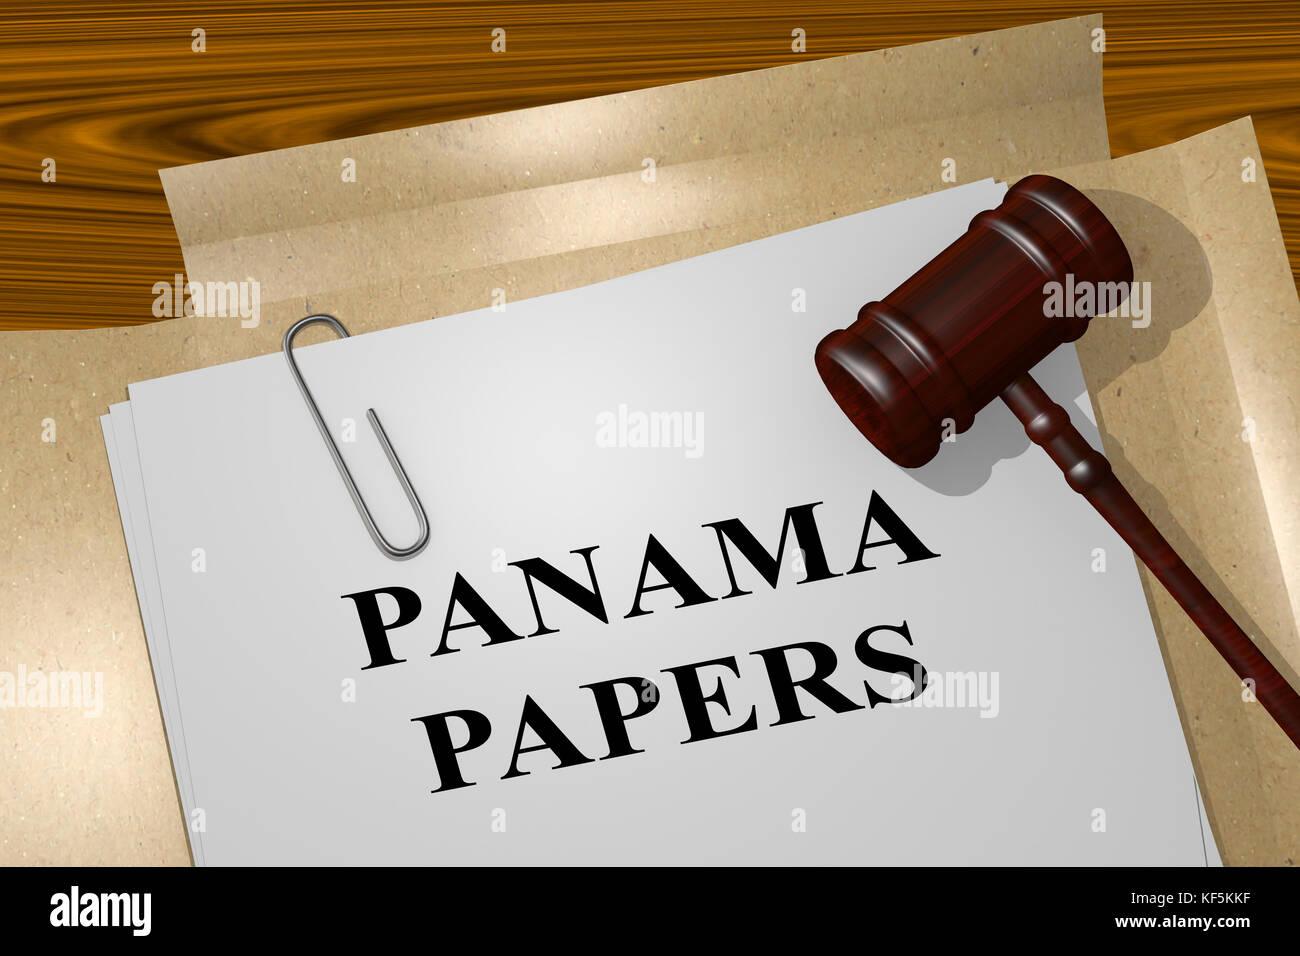 3D-Illustration des Titels "PANAMA PAPERS" auf dem juristischen Dokument Stockfoto